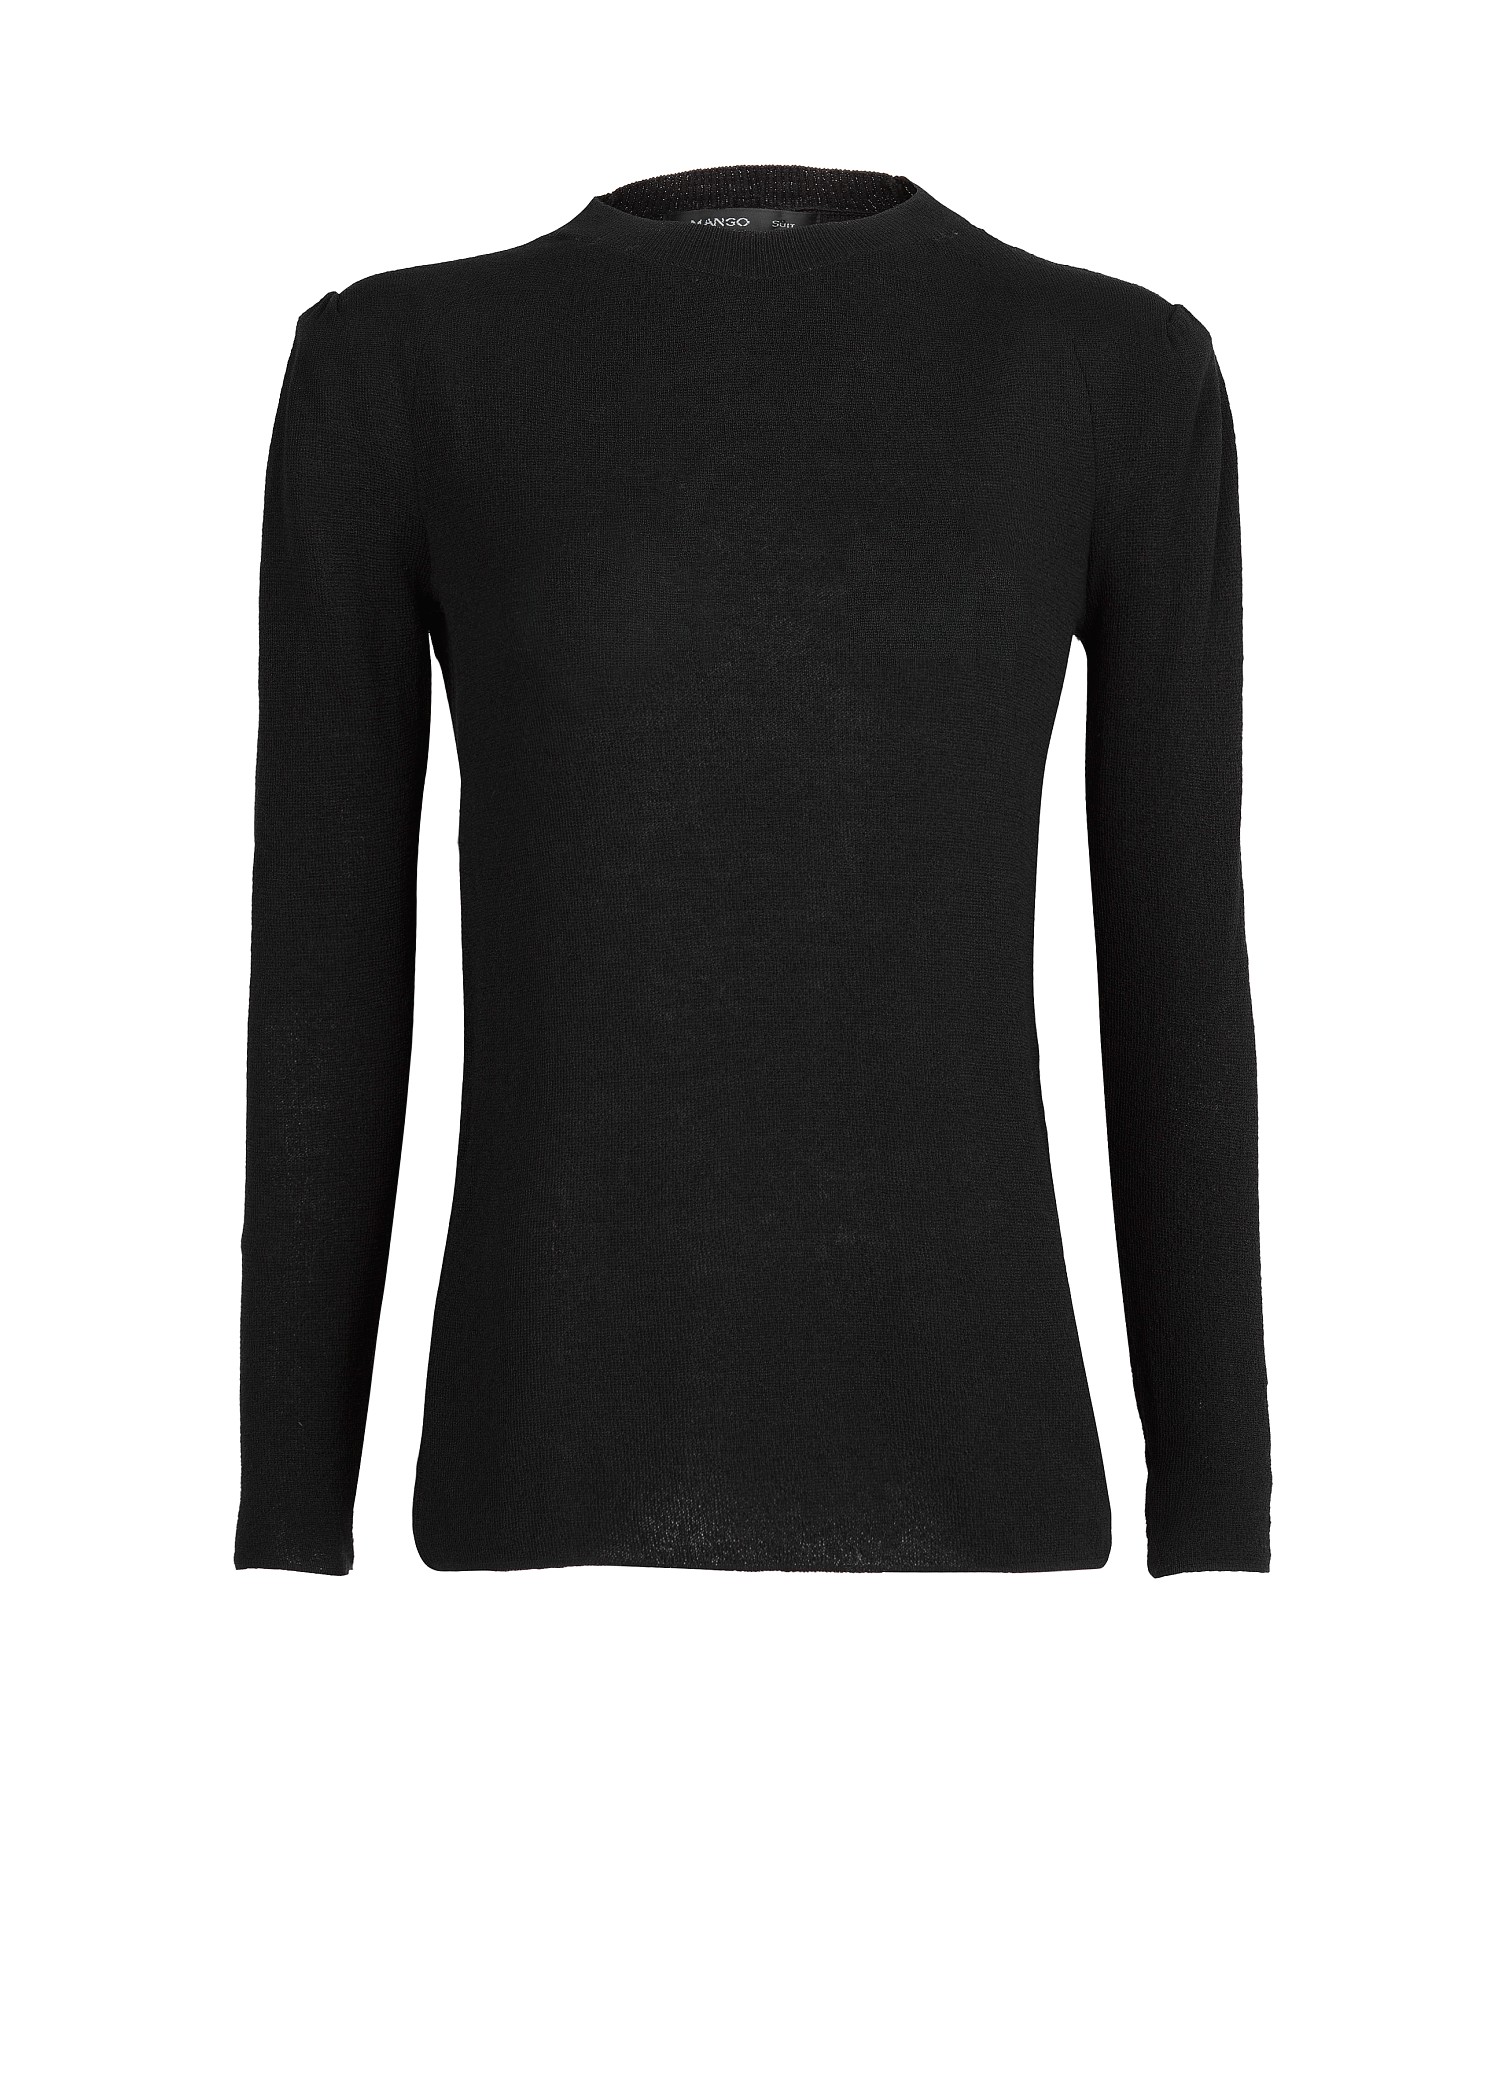 Mango Padded Shoulder Sweater in Black | Lyst